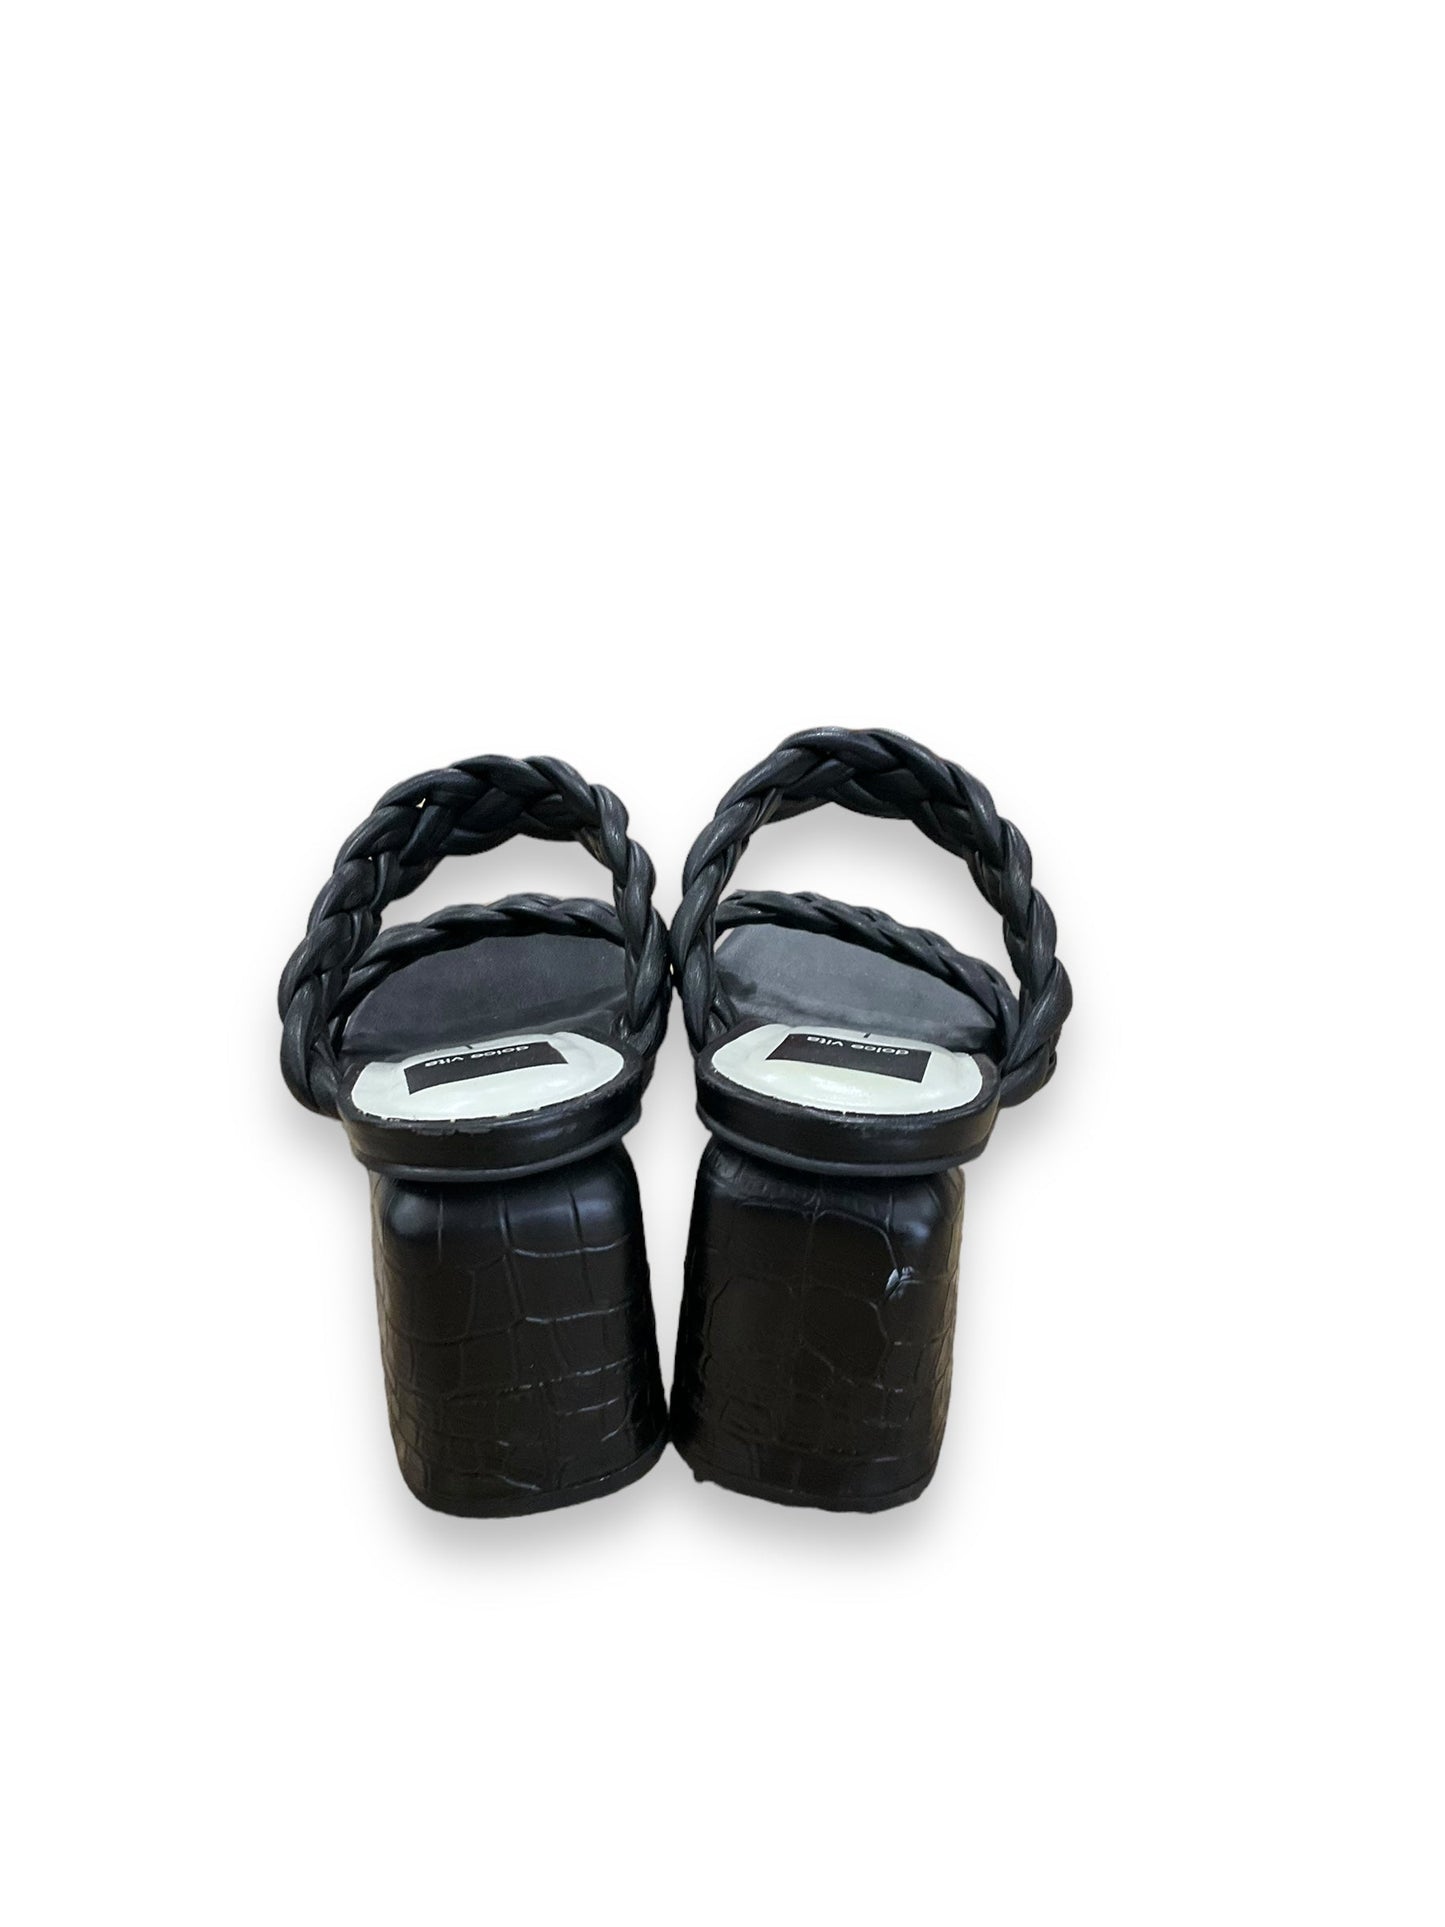 Black Sandals Heels Block Dolce Vita, Size 6.5